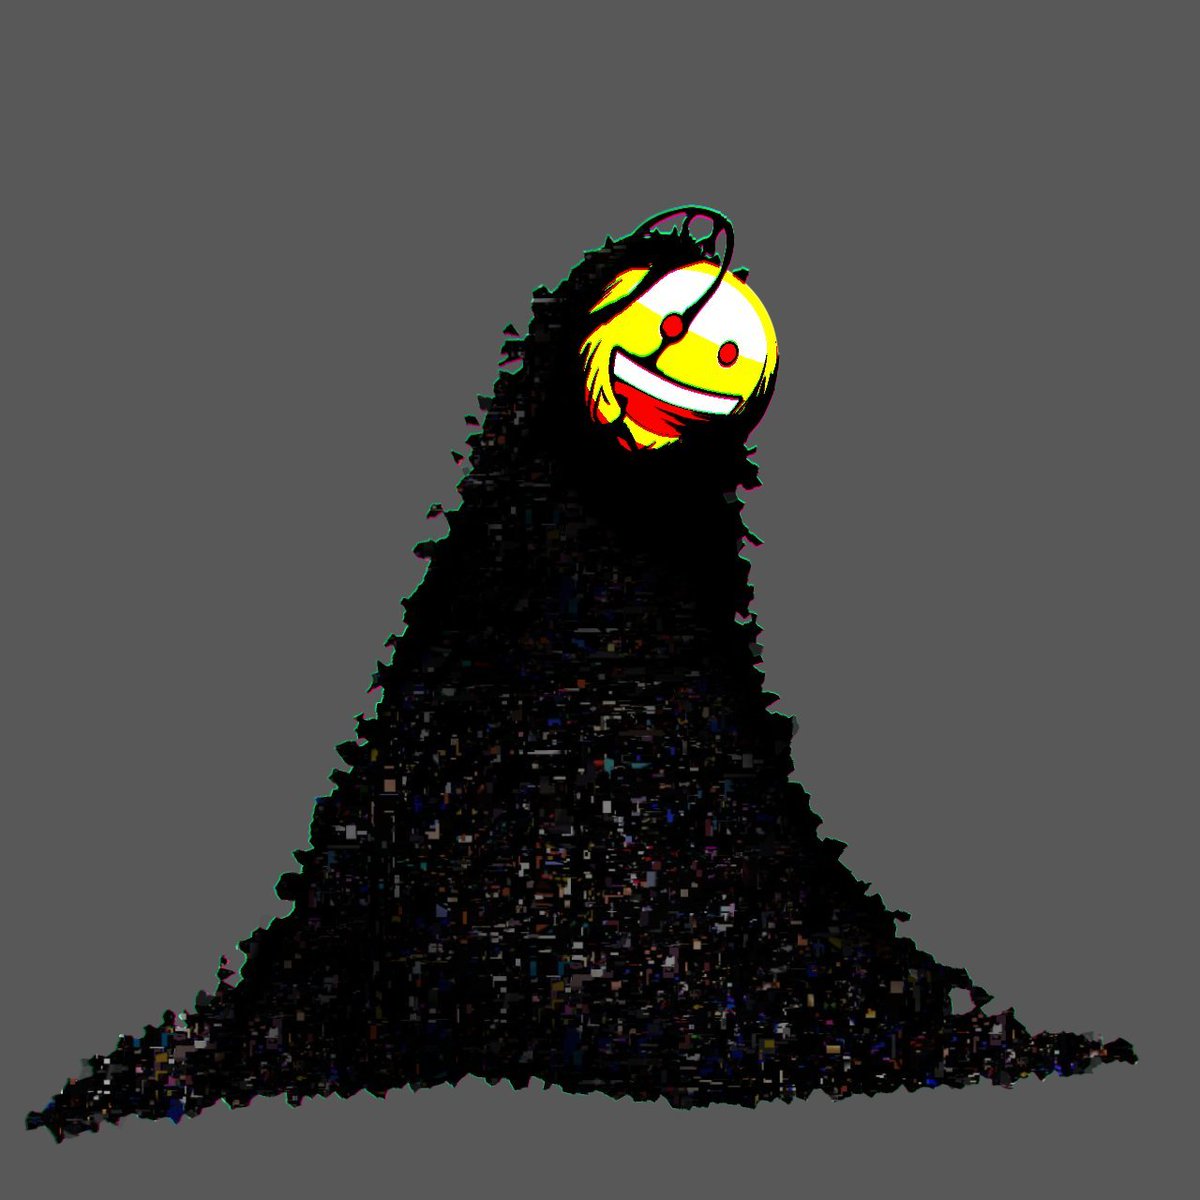 let the darkness consume you... :)
funni emoji guy
#pibbyapocalypse